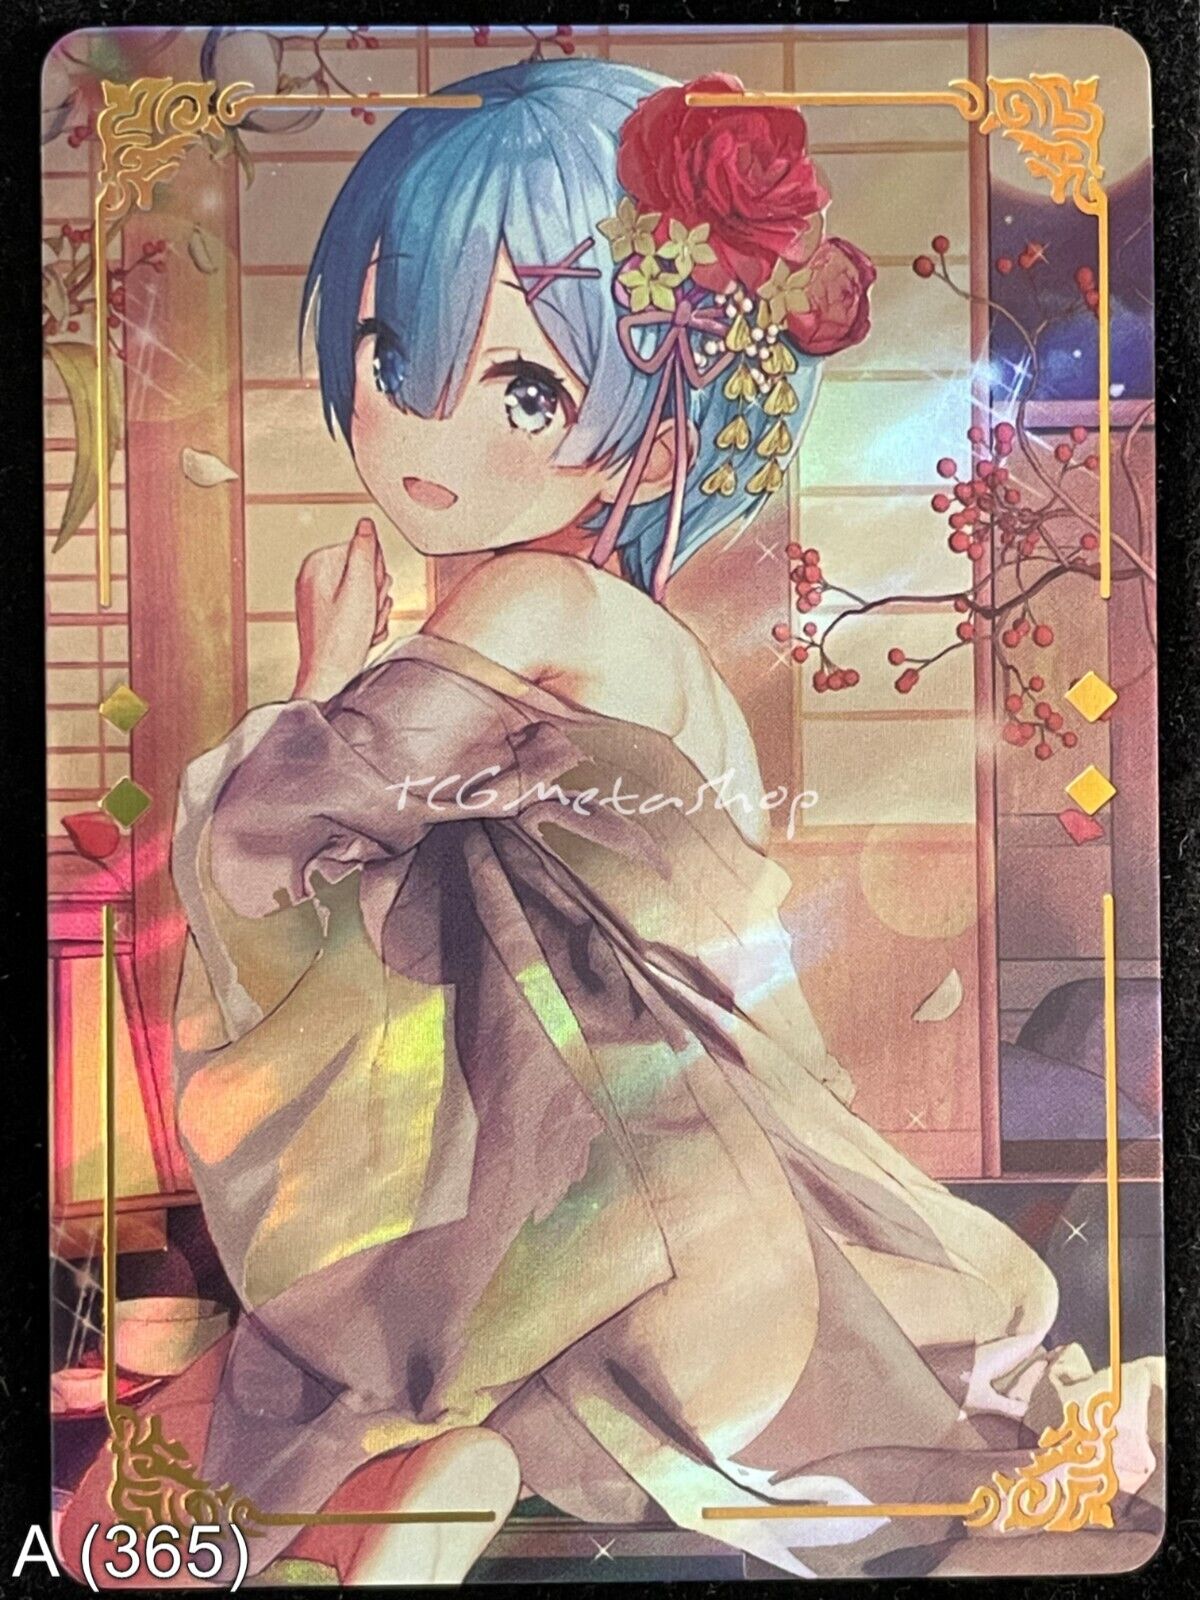 🔥 A 365 Rem Re:Zero Goddess Story Anime Waifu Card ACG 🔥